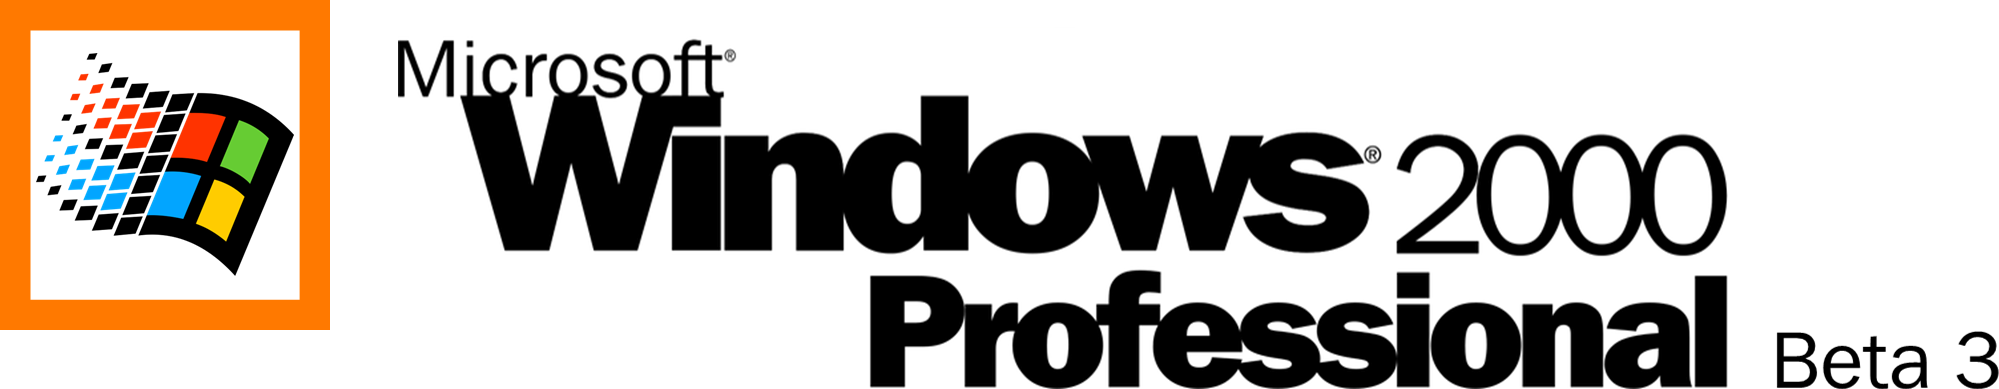 windows 3 logo